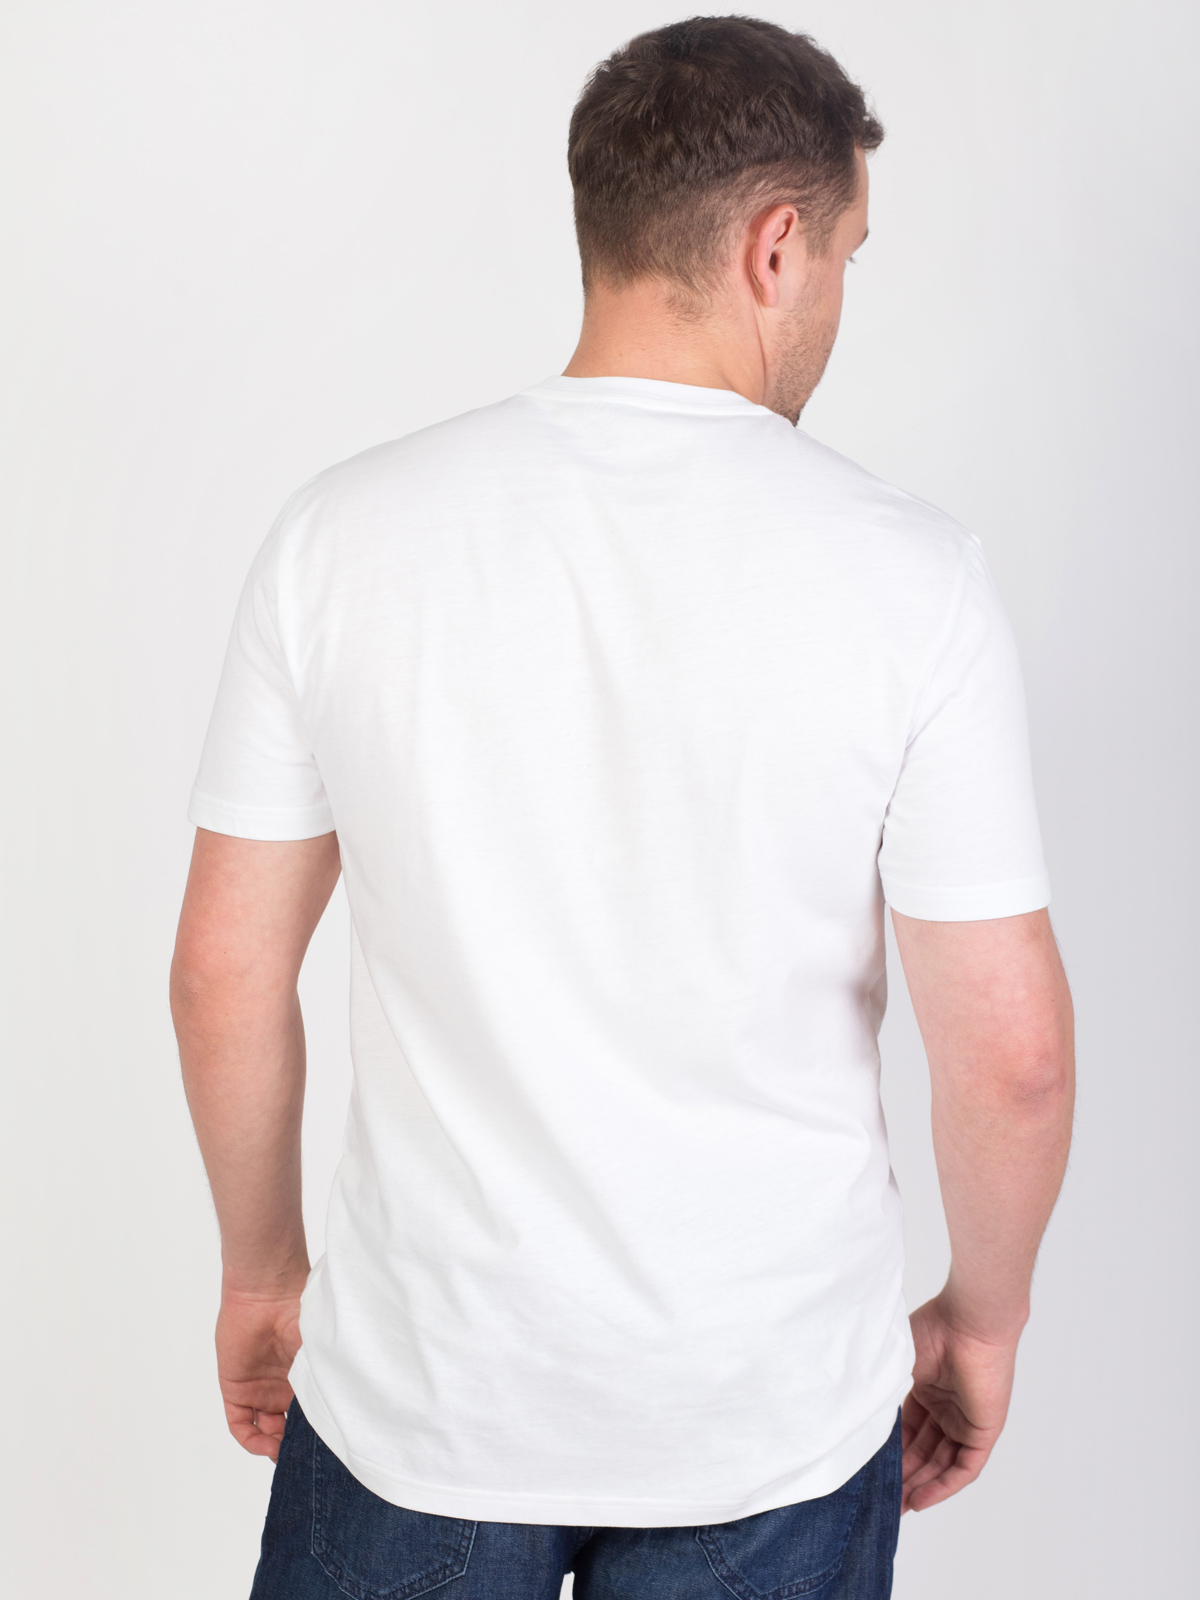 White tshirt with blue run print - 96440 € 12.37 img2